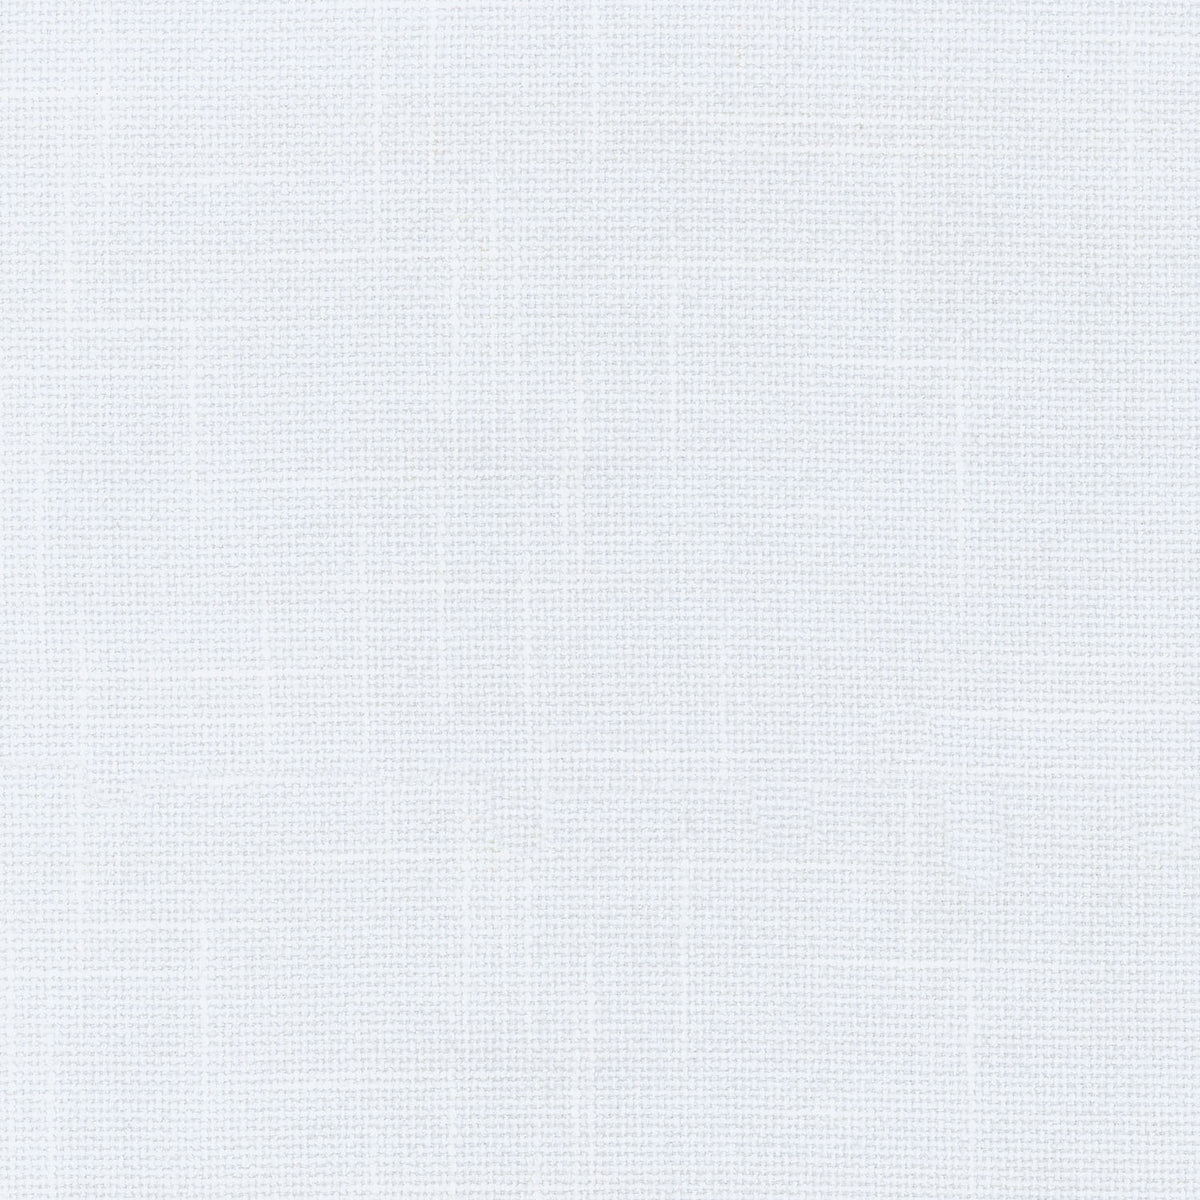 P/K Lifestyles Mixology - White 404398 Upholstery Fabric